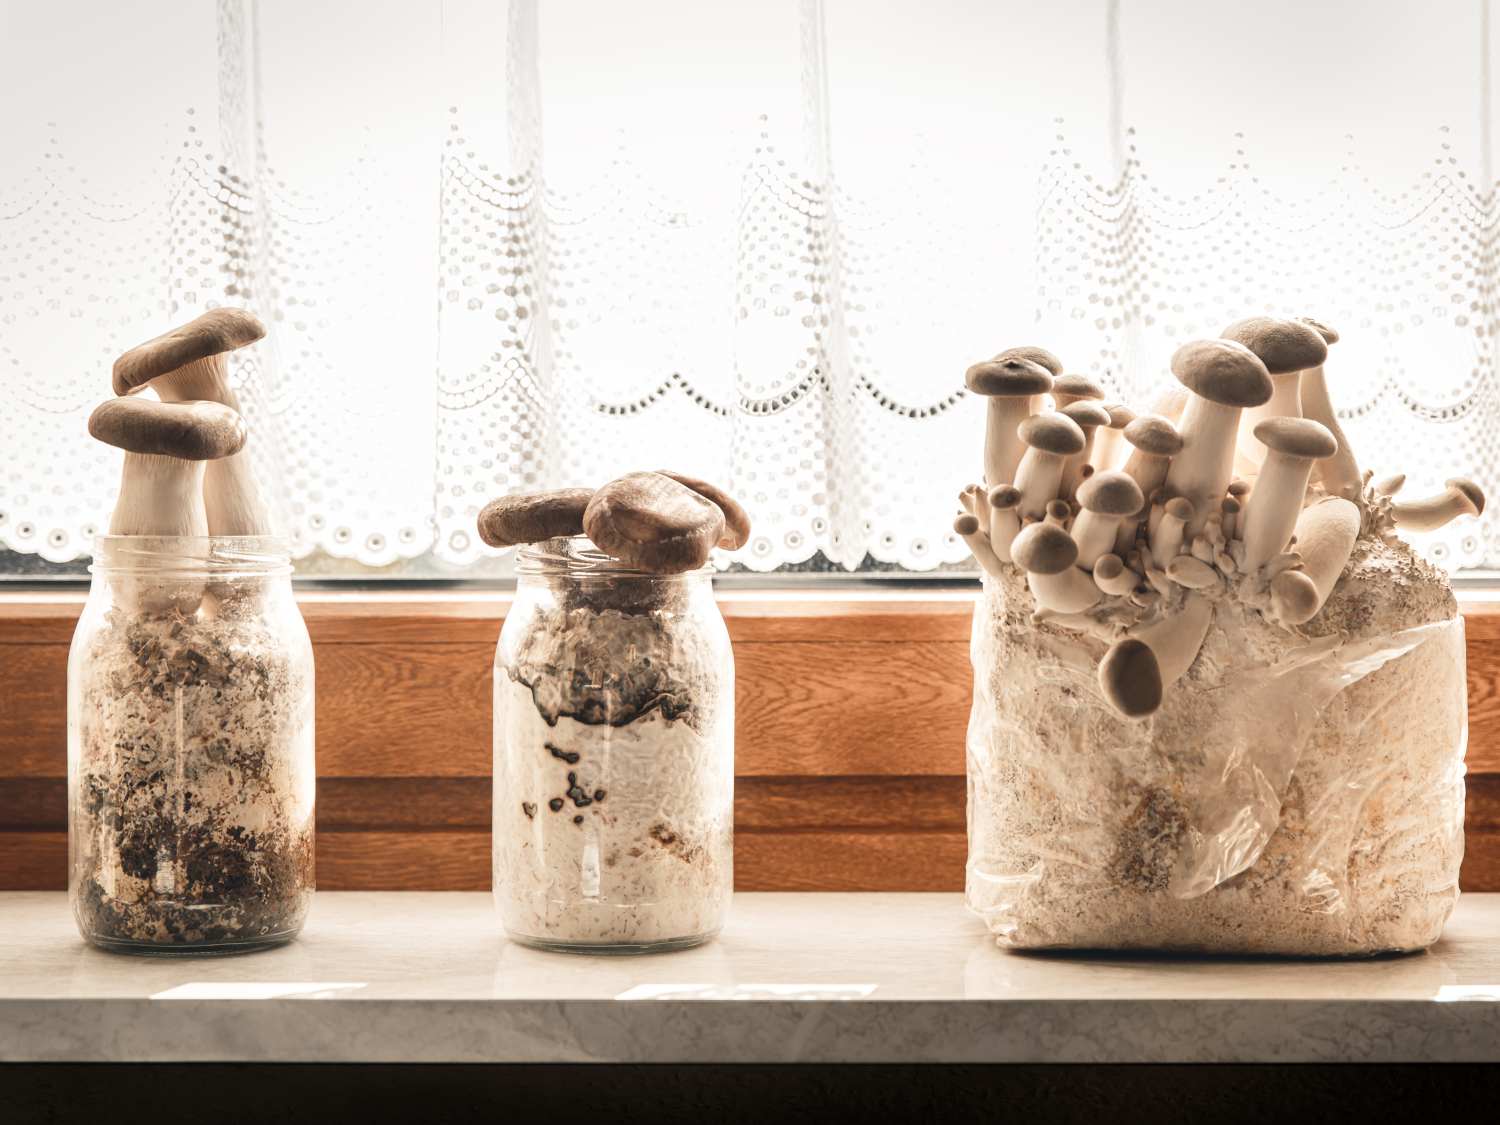 How to grow mushrooms on coffee grounds